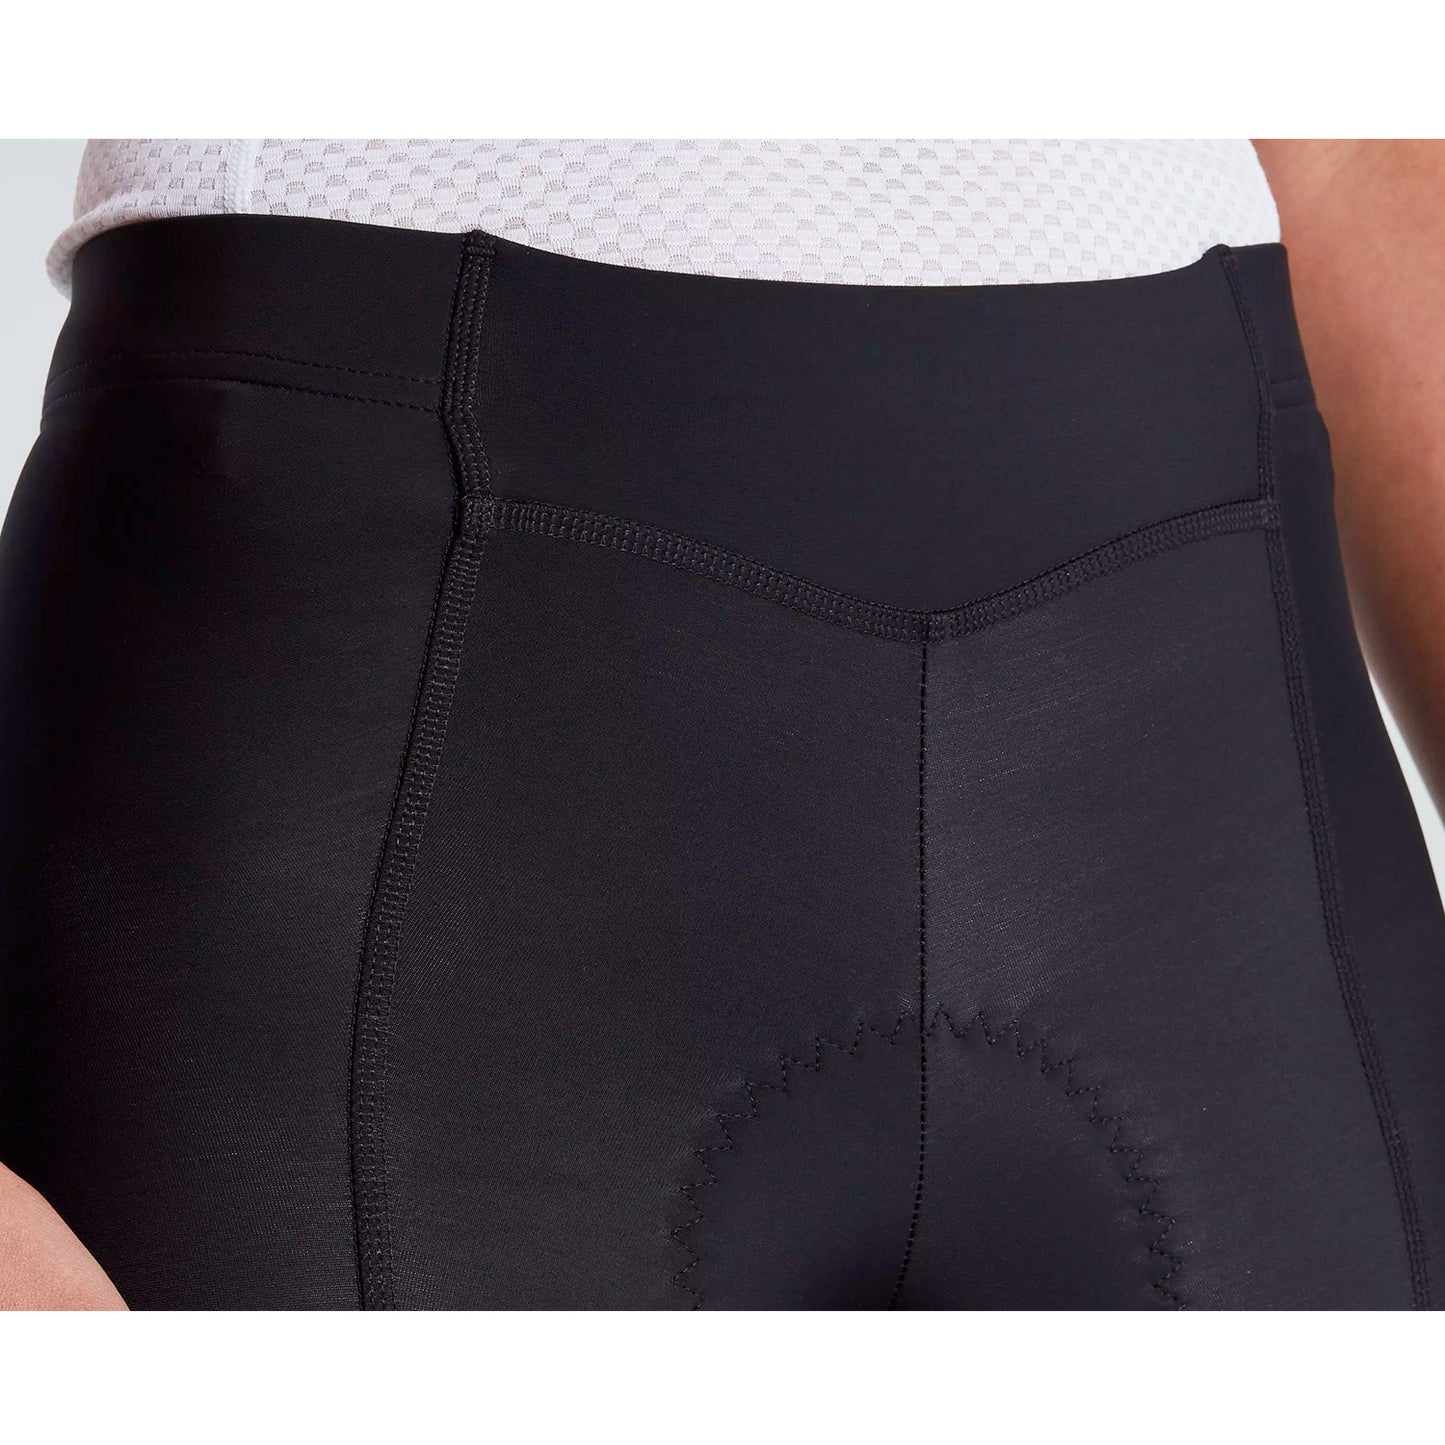 Specialized Women's RBX Sport Shorts, Black